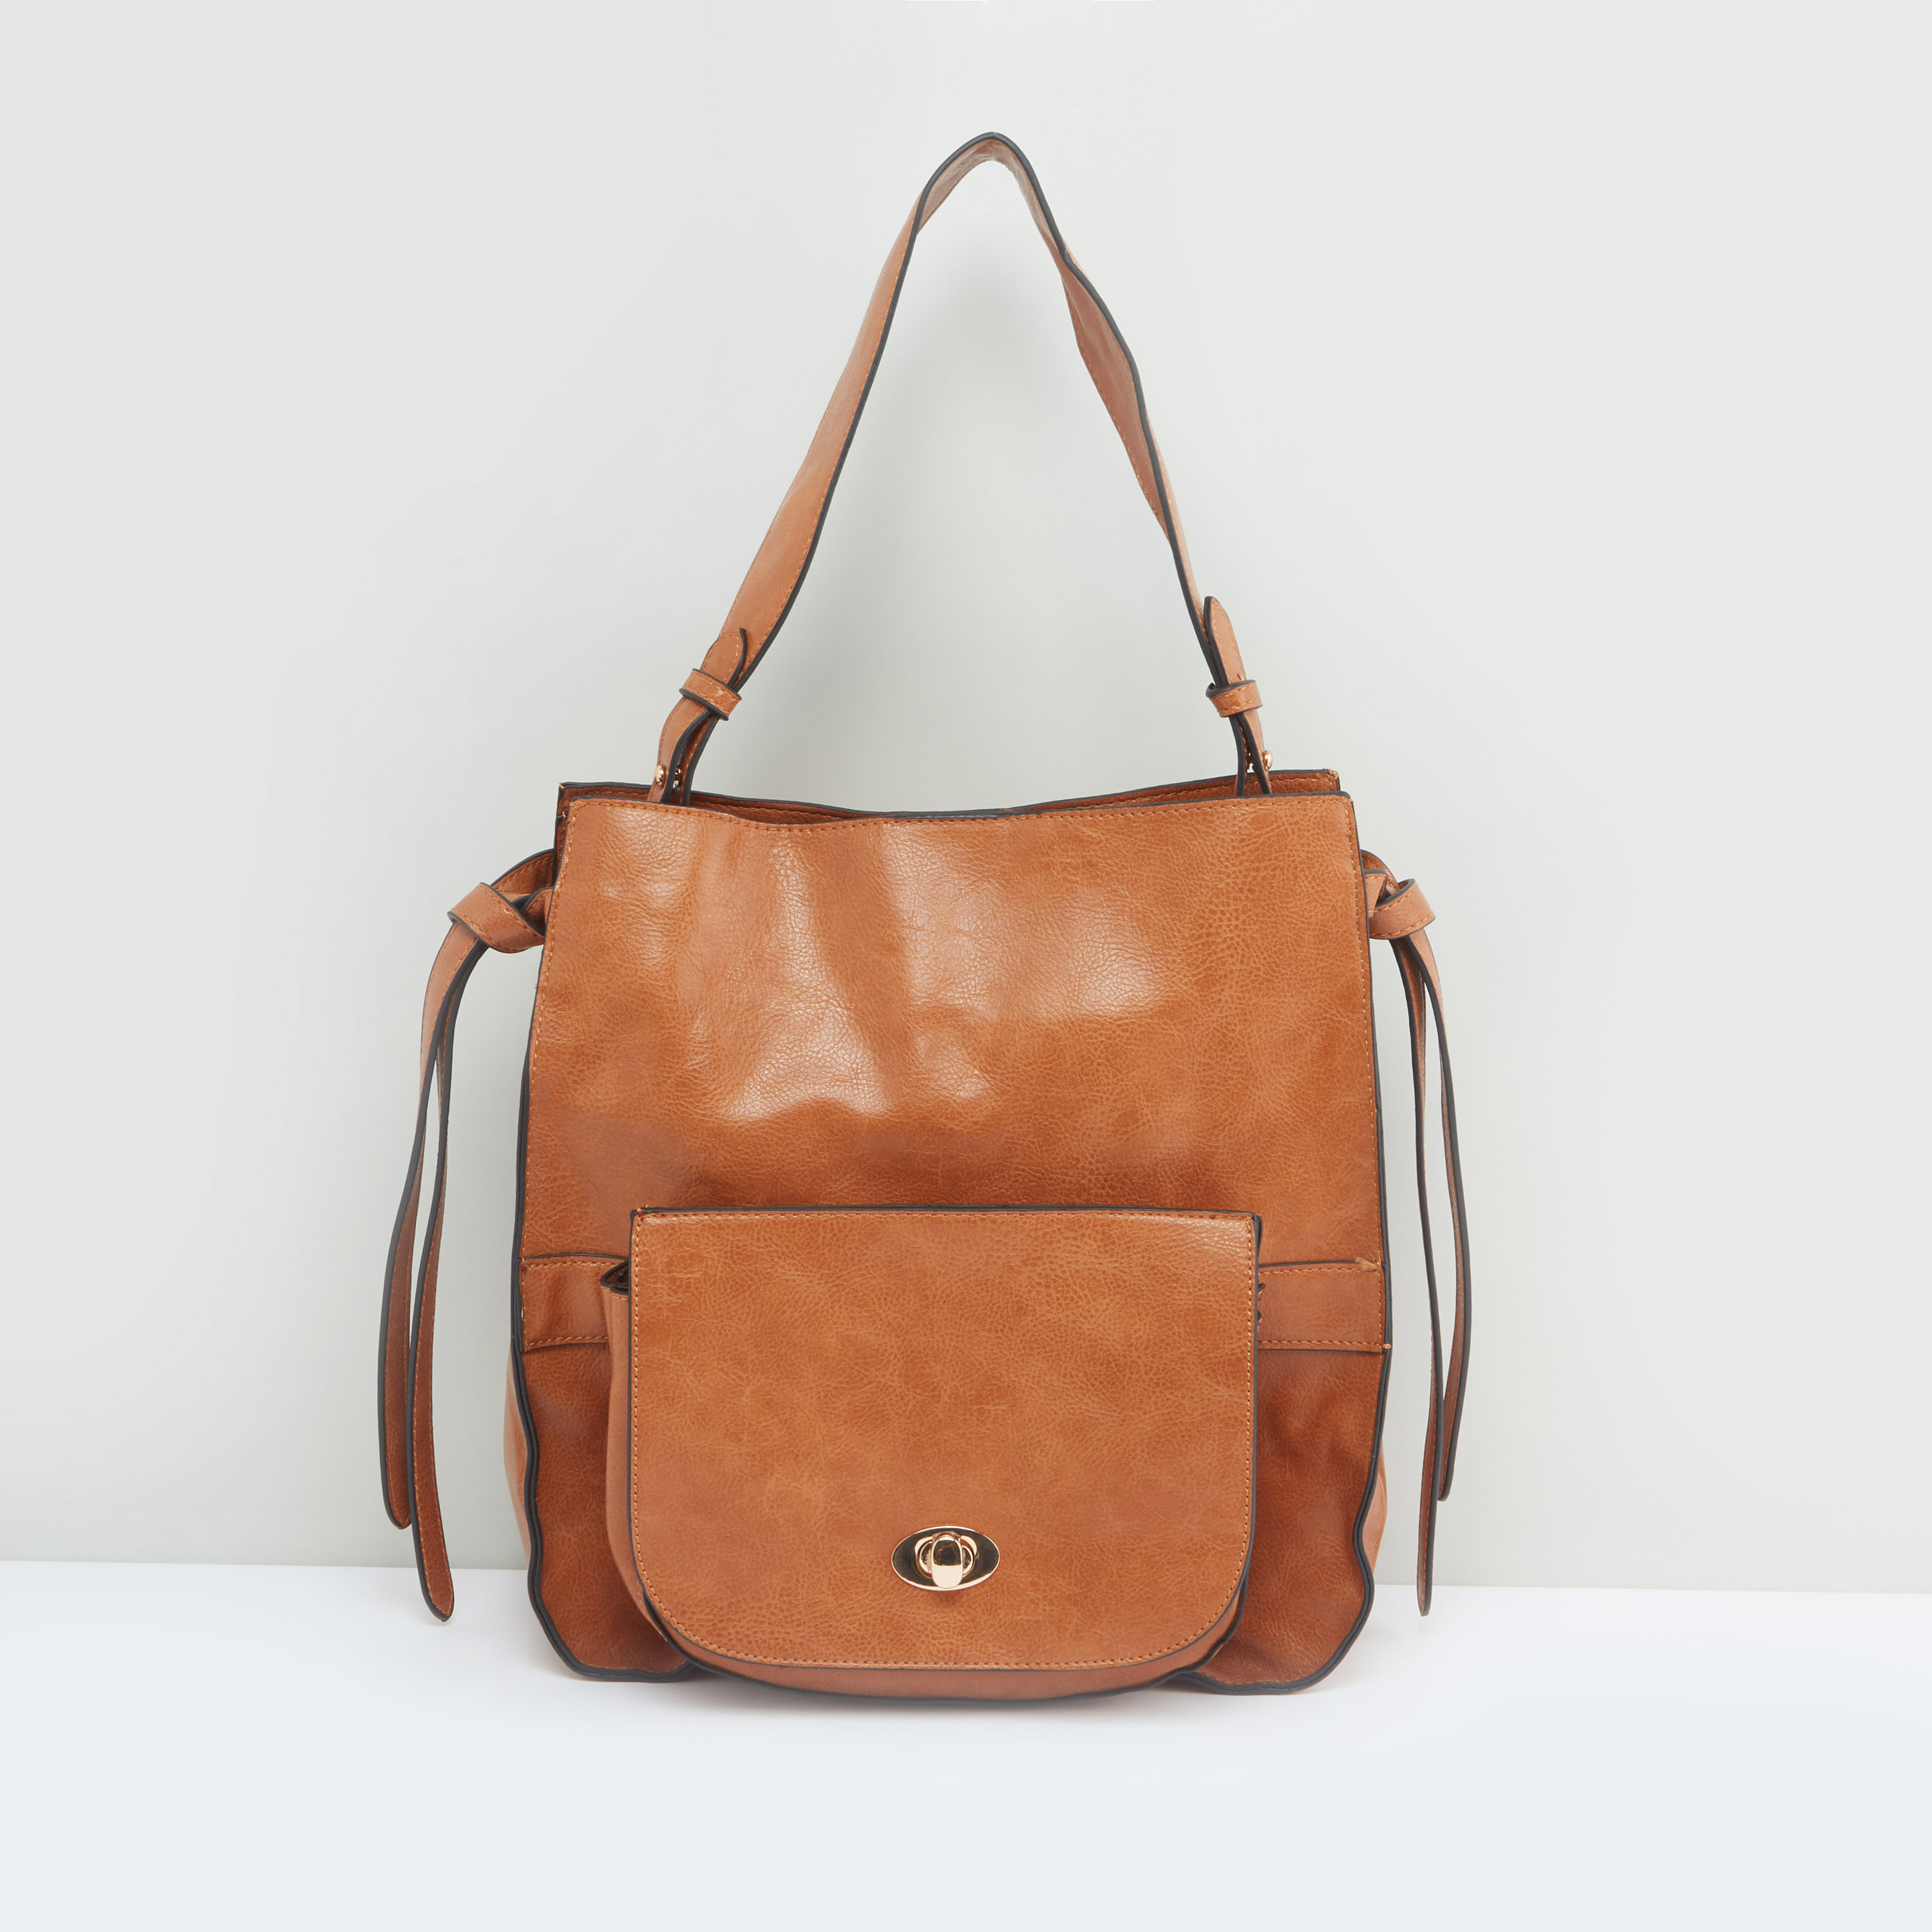 Shop Solid Duffle Bag Online | Max Kuwait